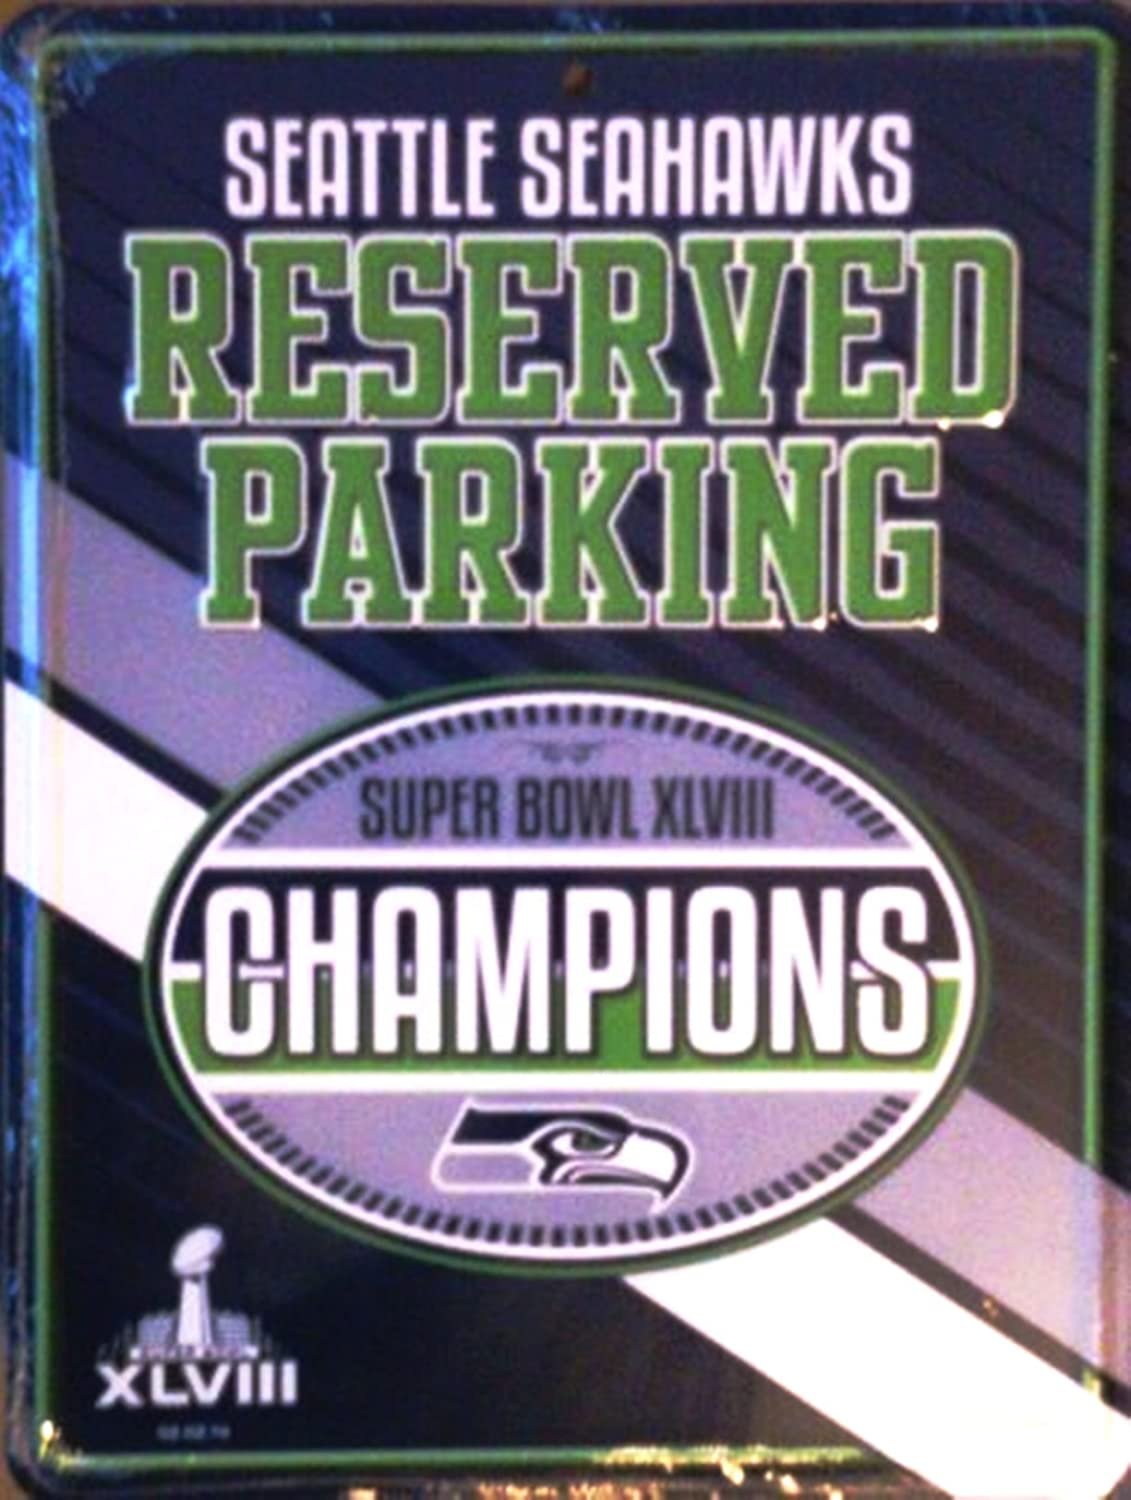 Seattle Seahawks 2014 Champions Metal Aluminum Novelty Wall Parking Sign Football Super Bowl Championship